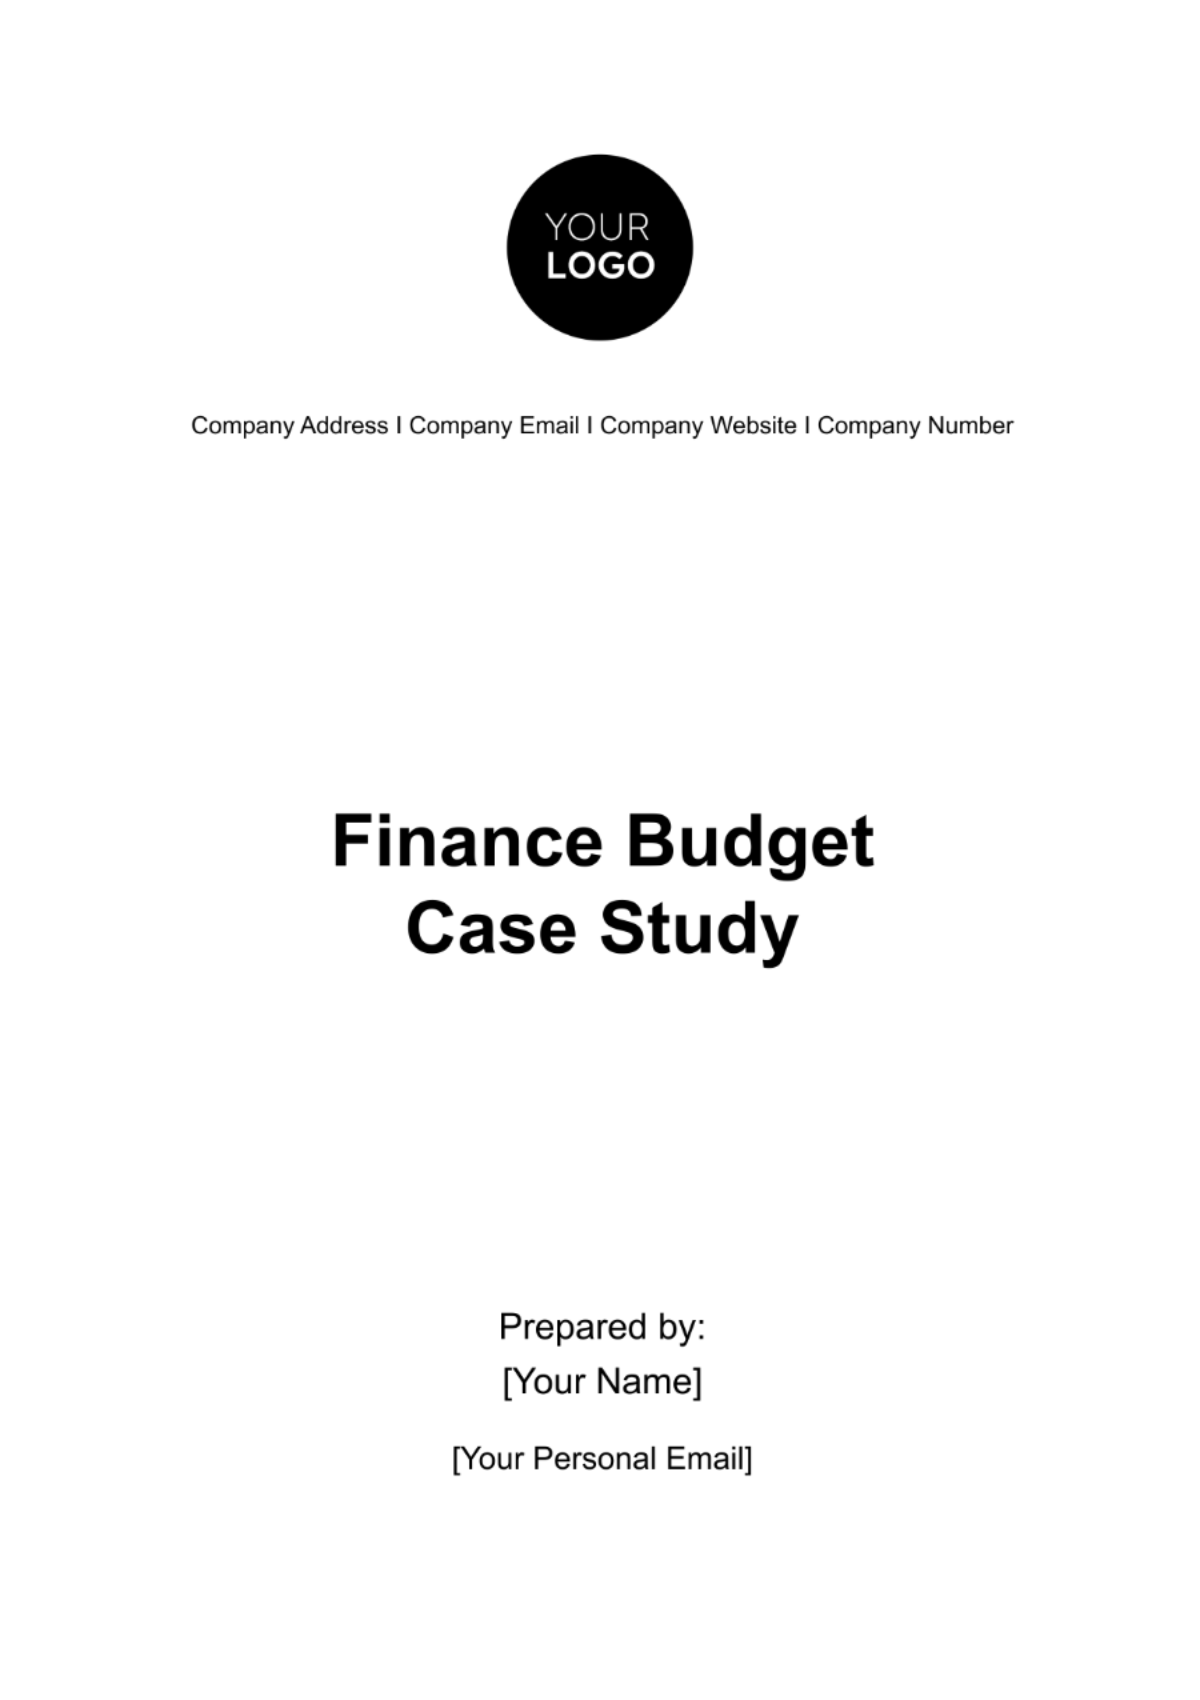 Finance Budget Case Study Template